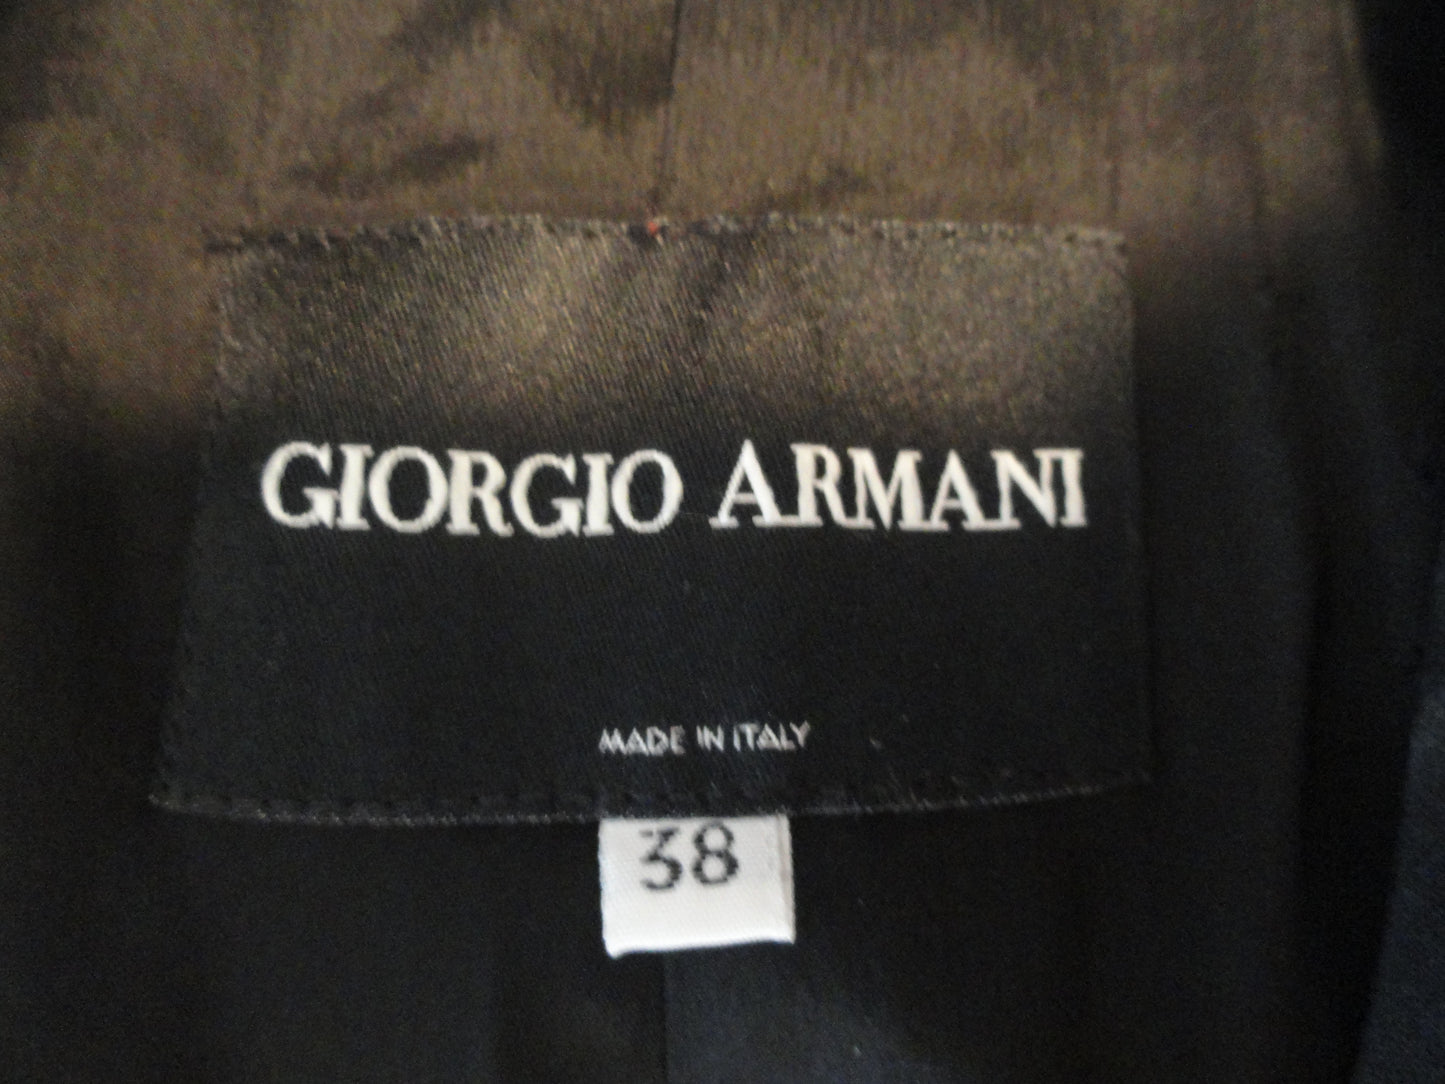 Giorgio Armani Blazer Black Size 38 (SKU 000259-1)